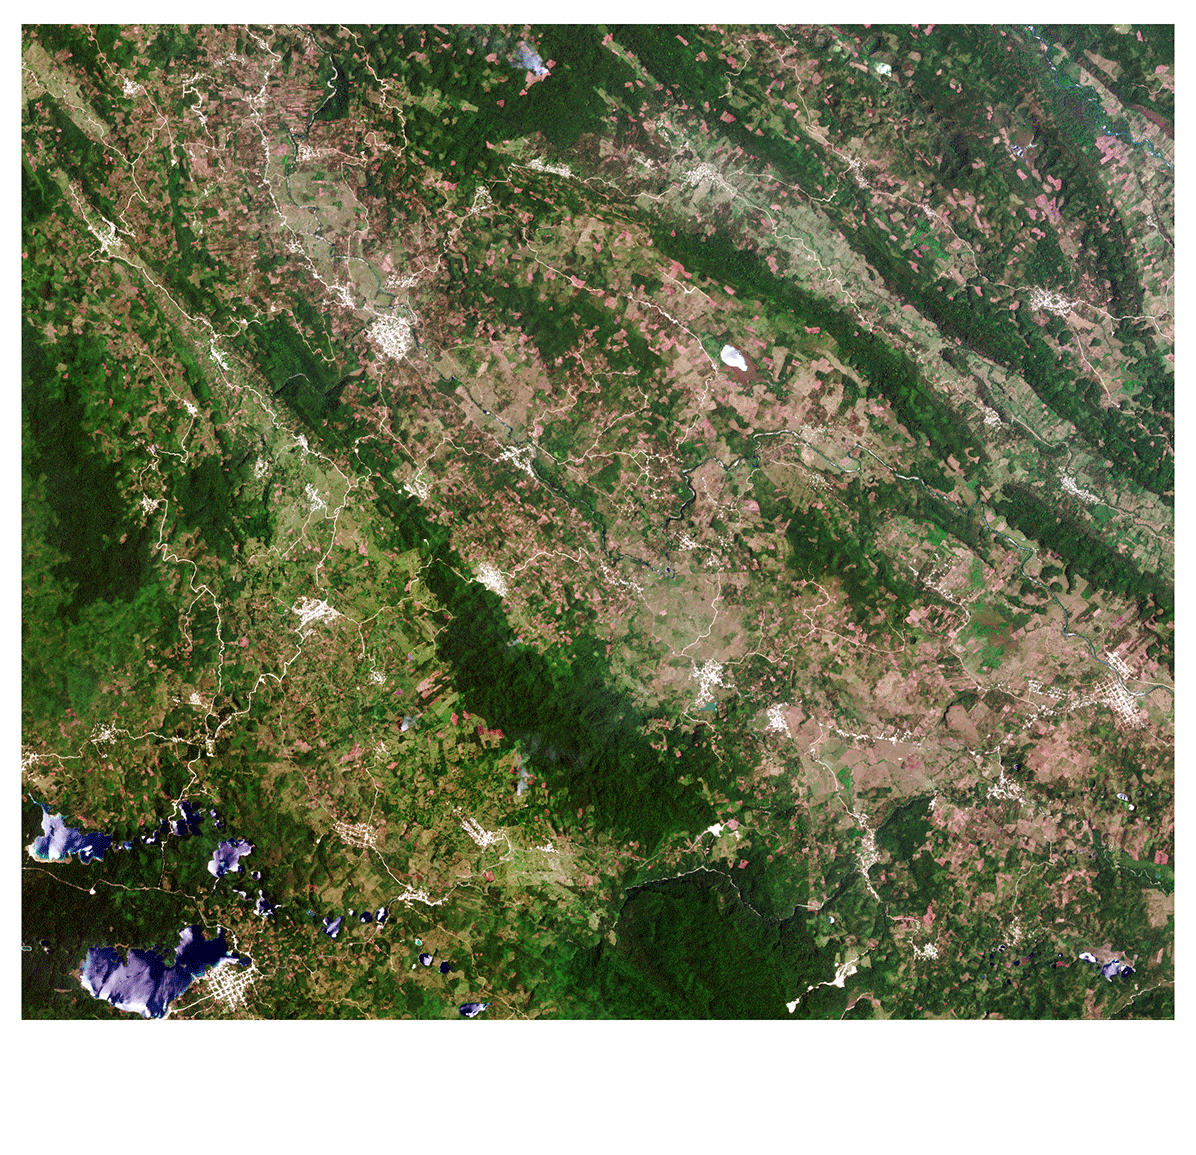 Chiapas forest land-cover map